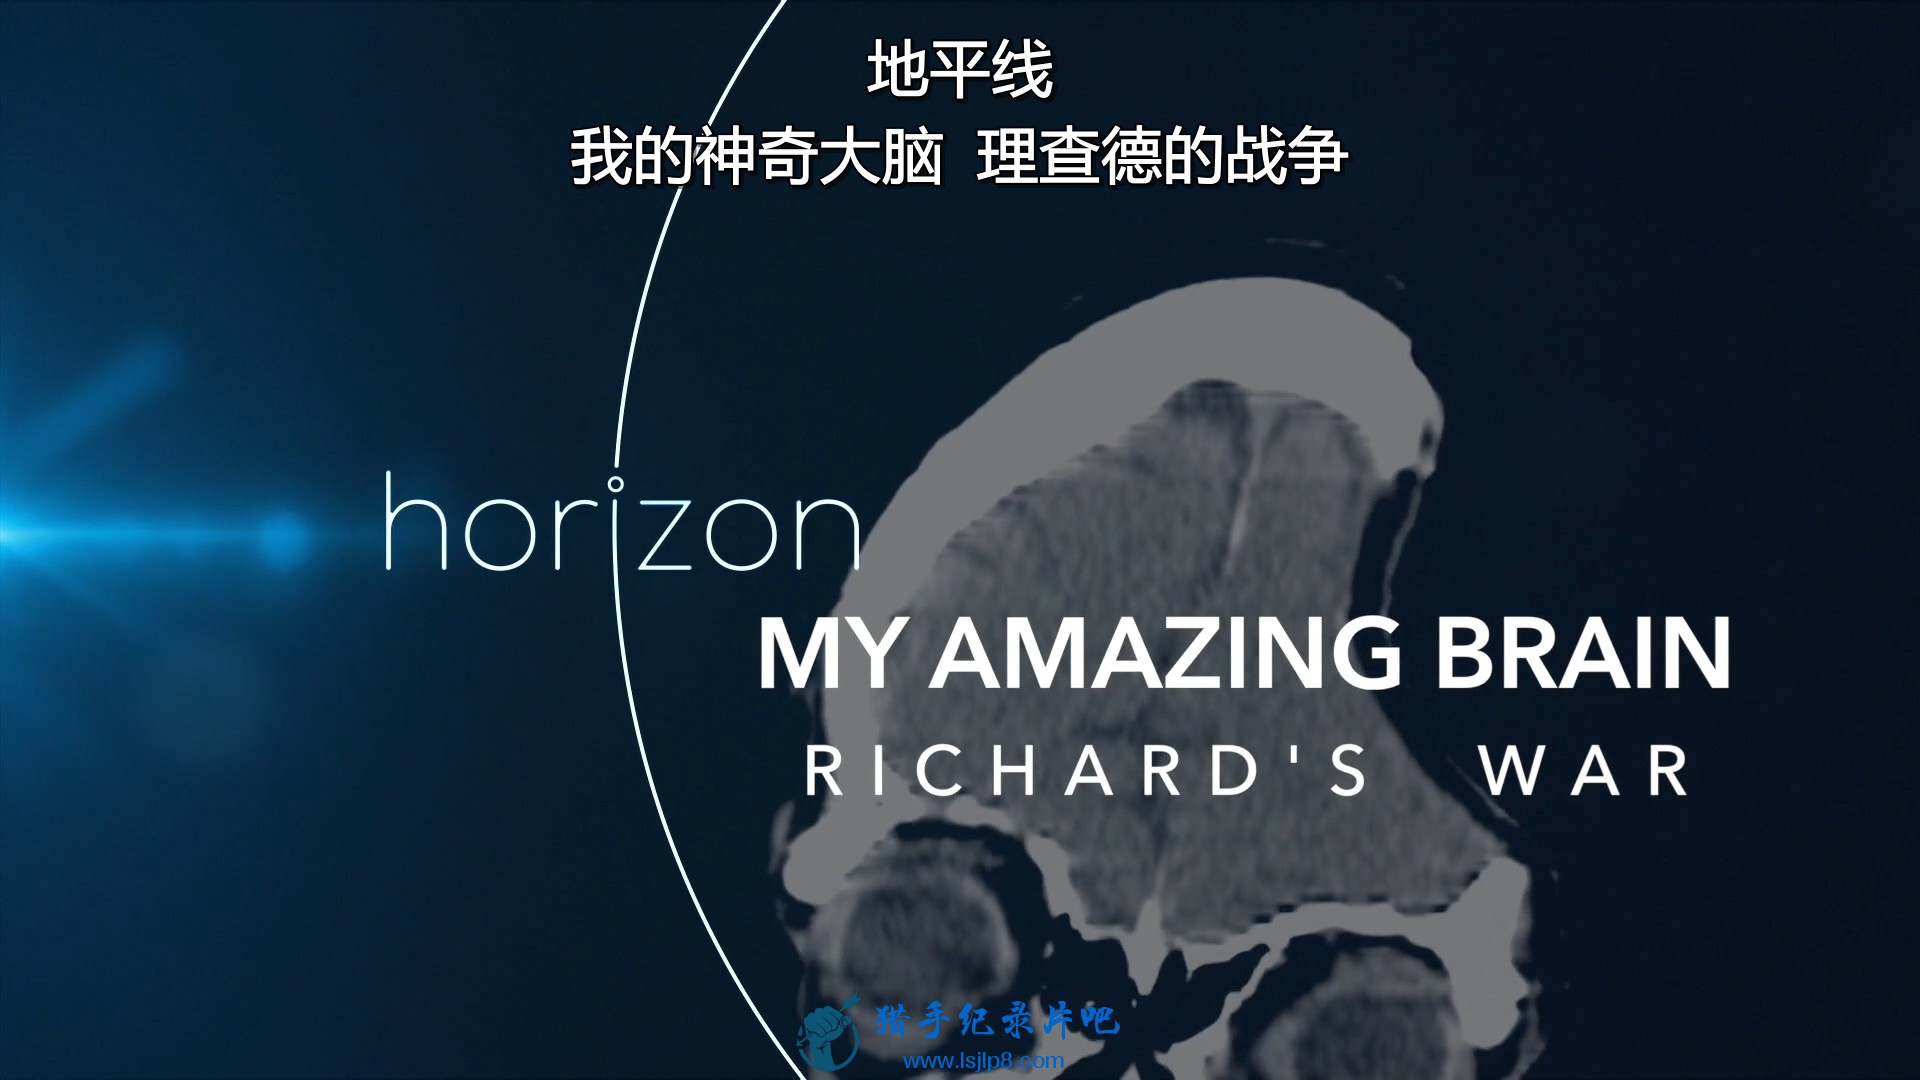 BBC.Horizon.2018.My.Amazing.Brain.1080p.HDTV.x264.AAC.mkv[eztv].mkv_20191019_085.jpg